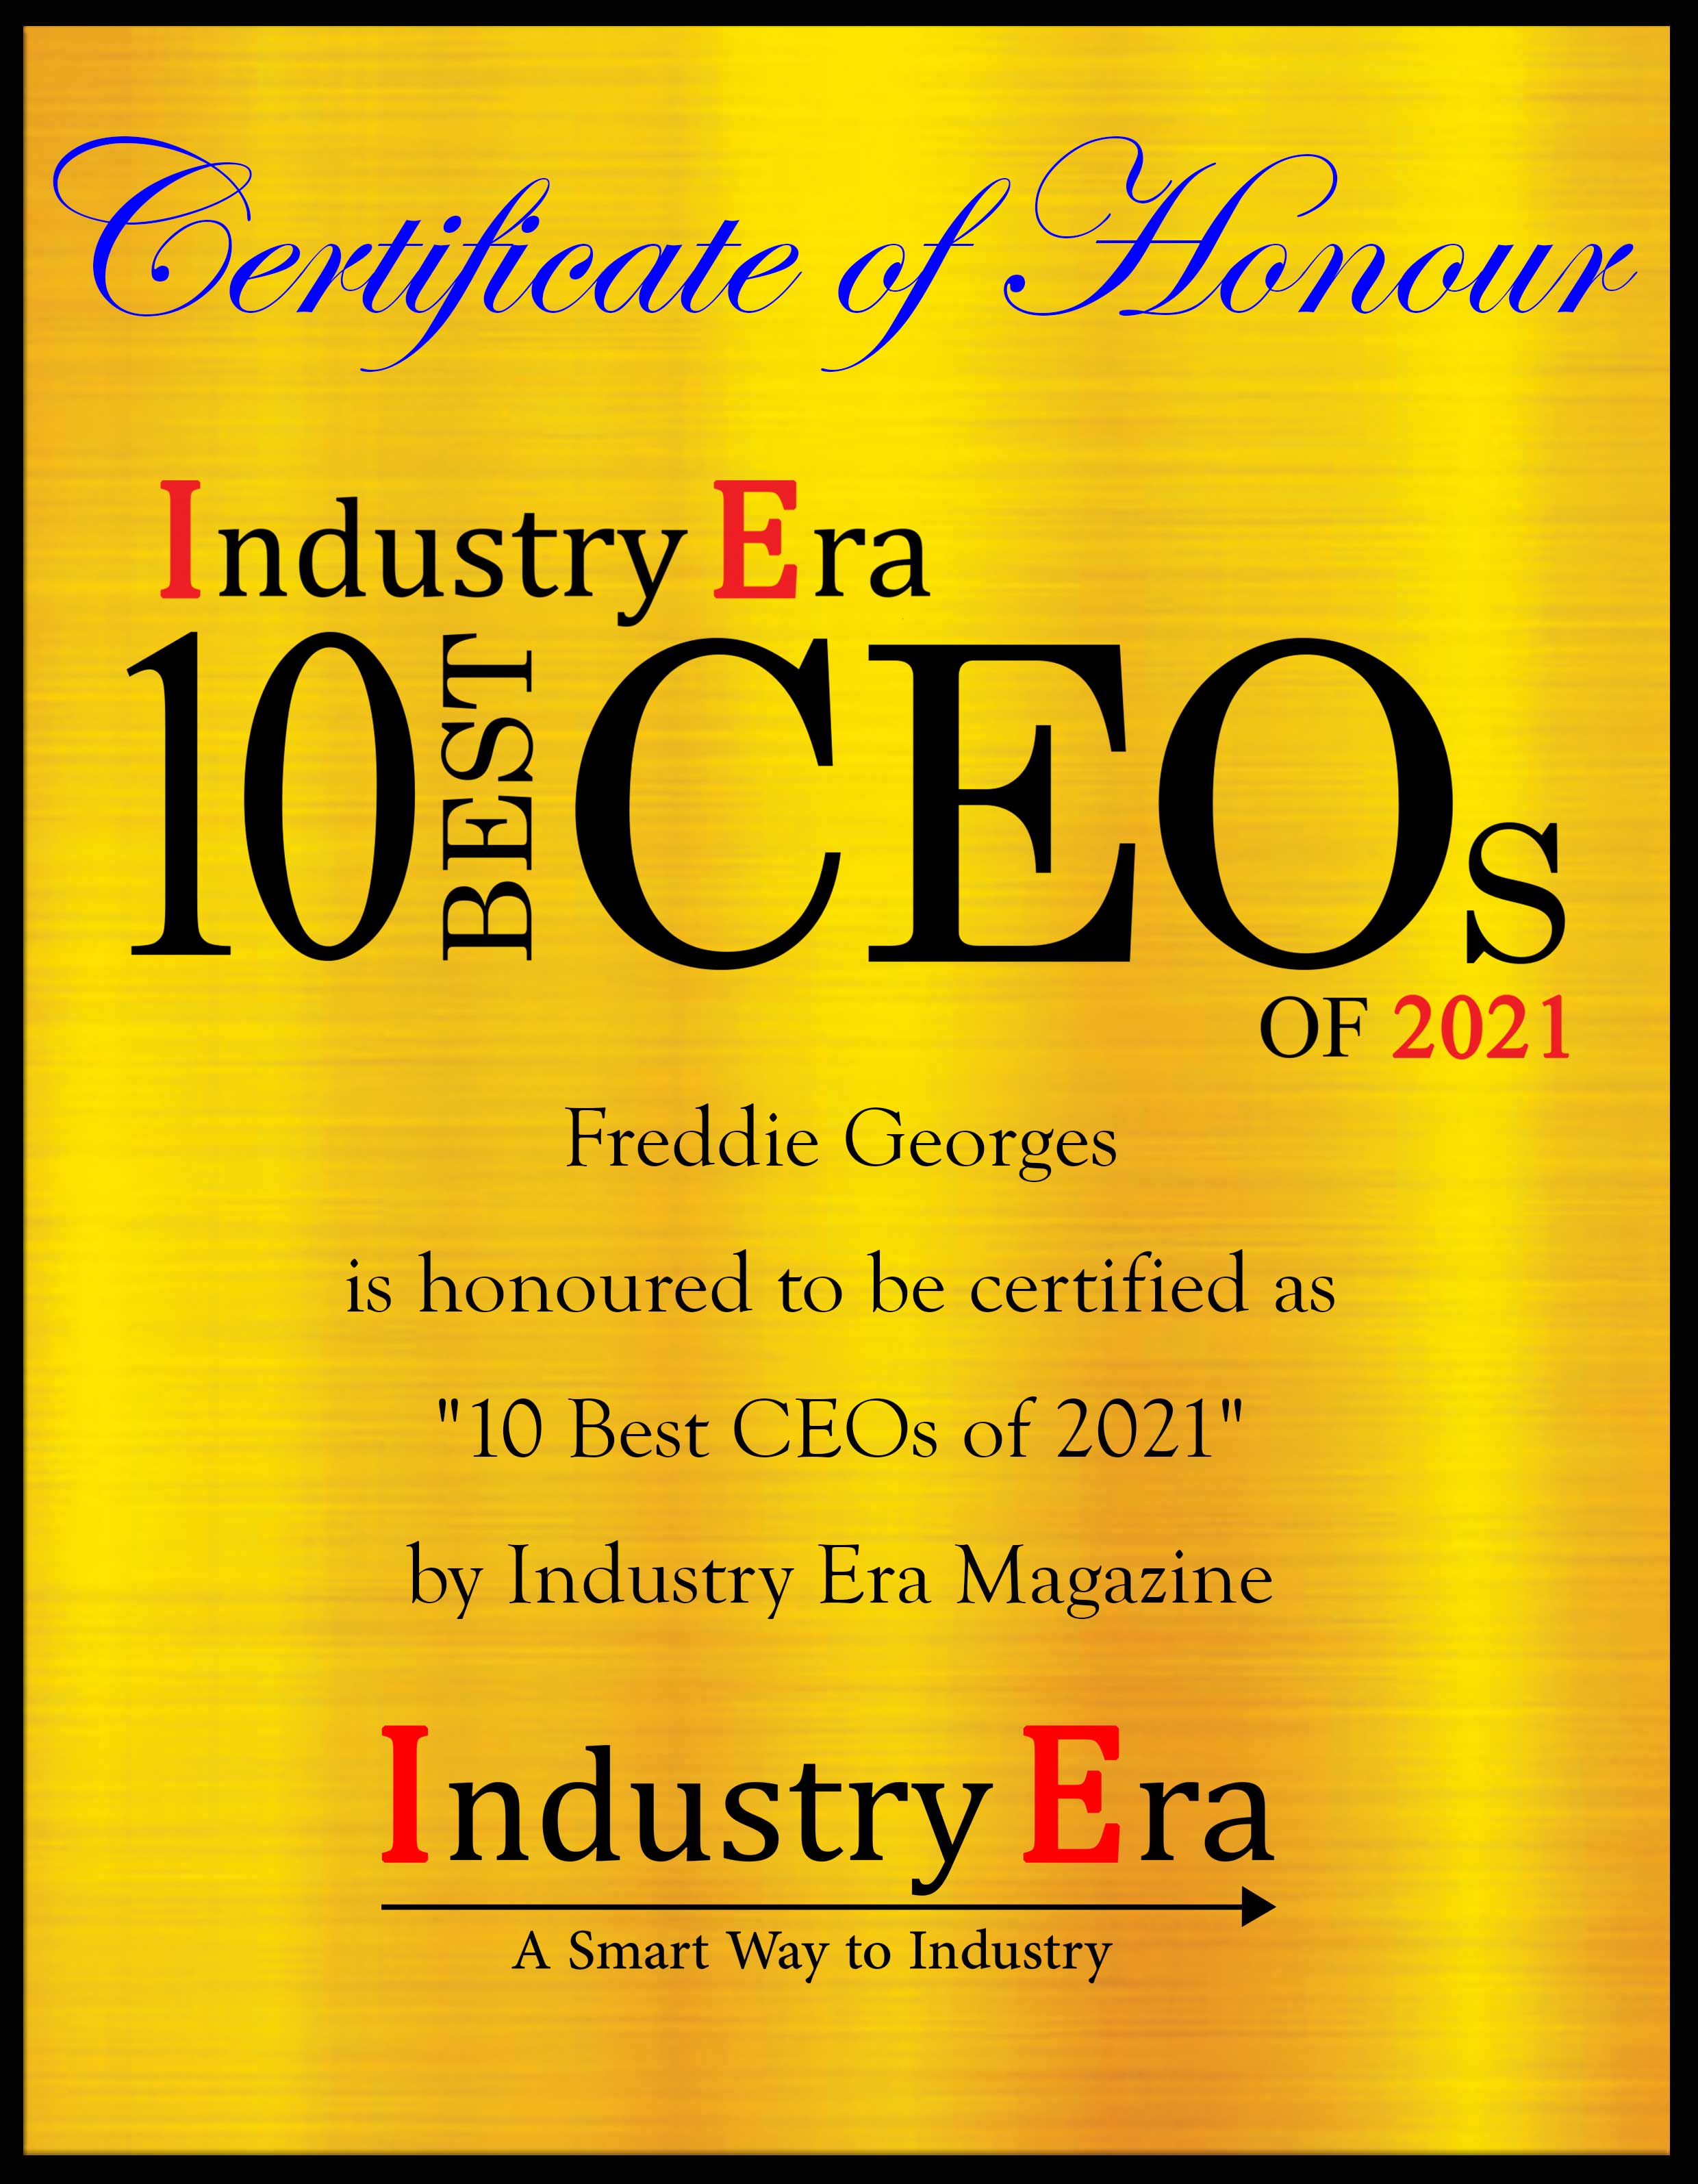 Freddie Georges,Founder & CEO of Freddie Georges Production Group Certificate